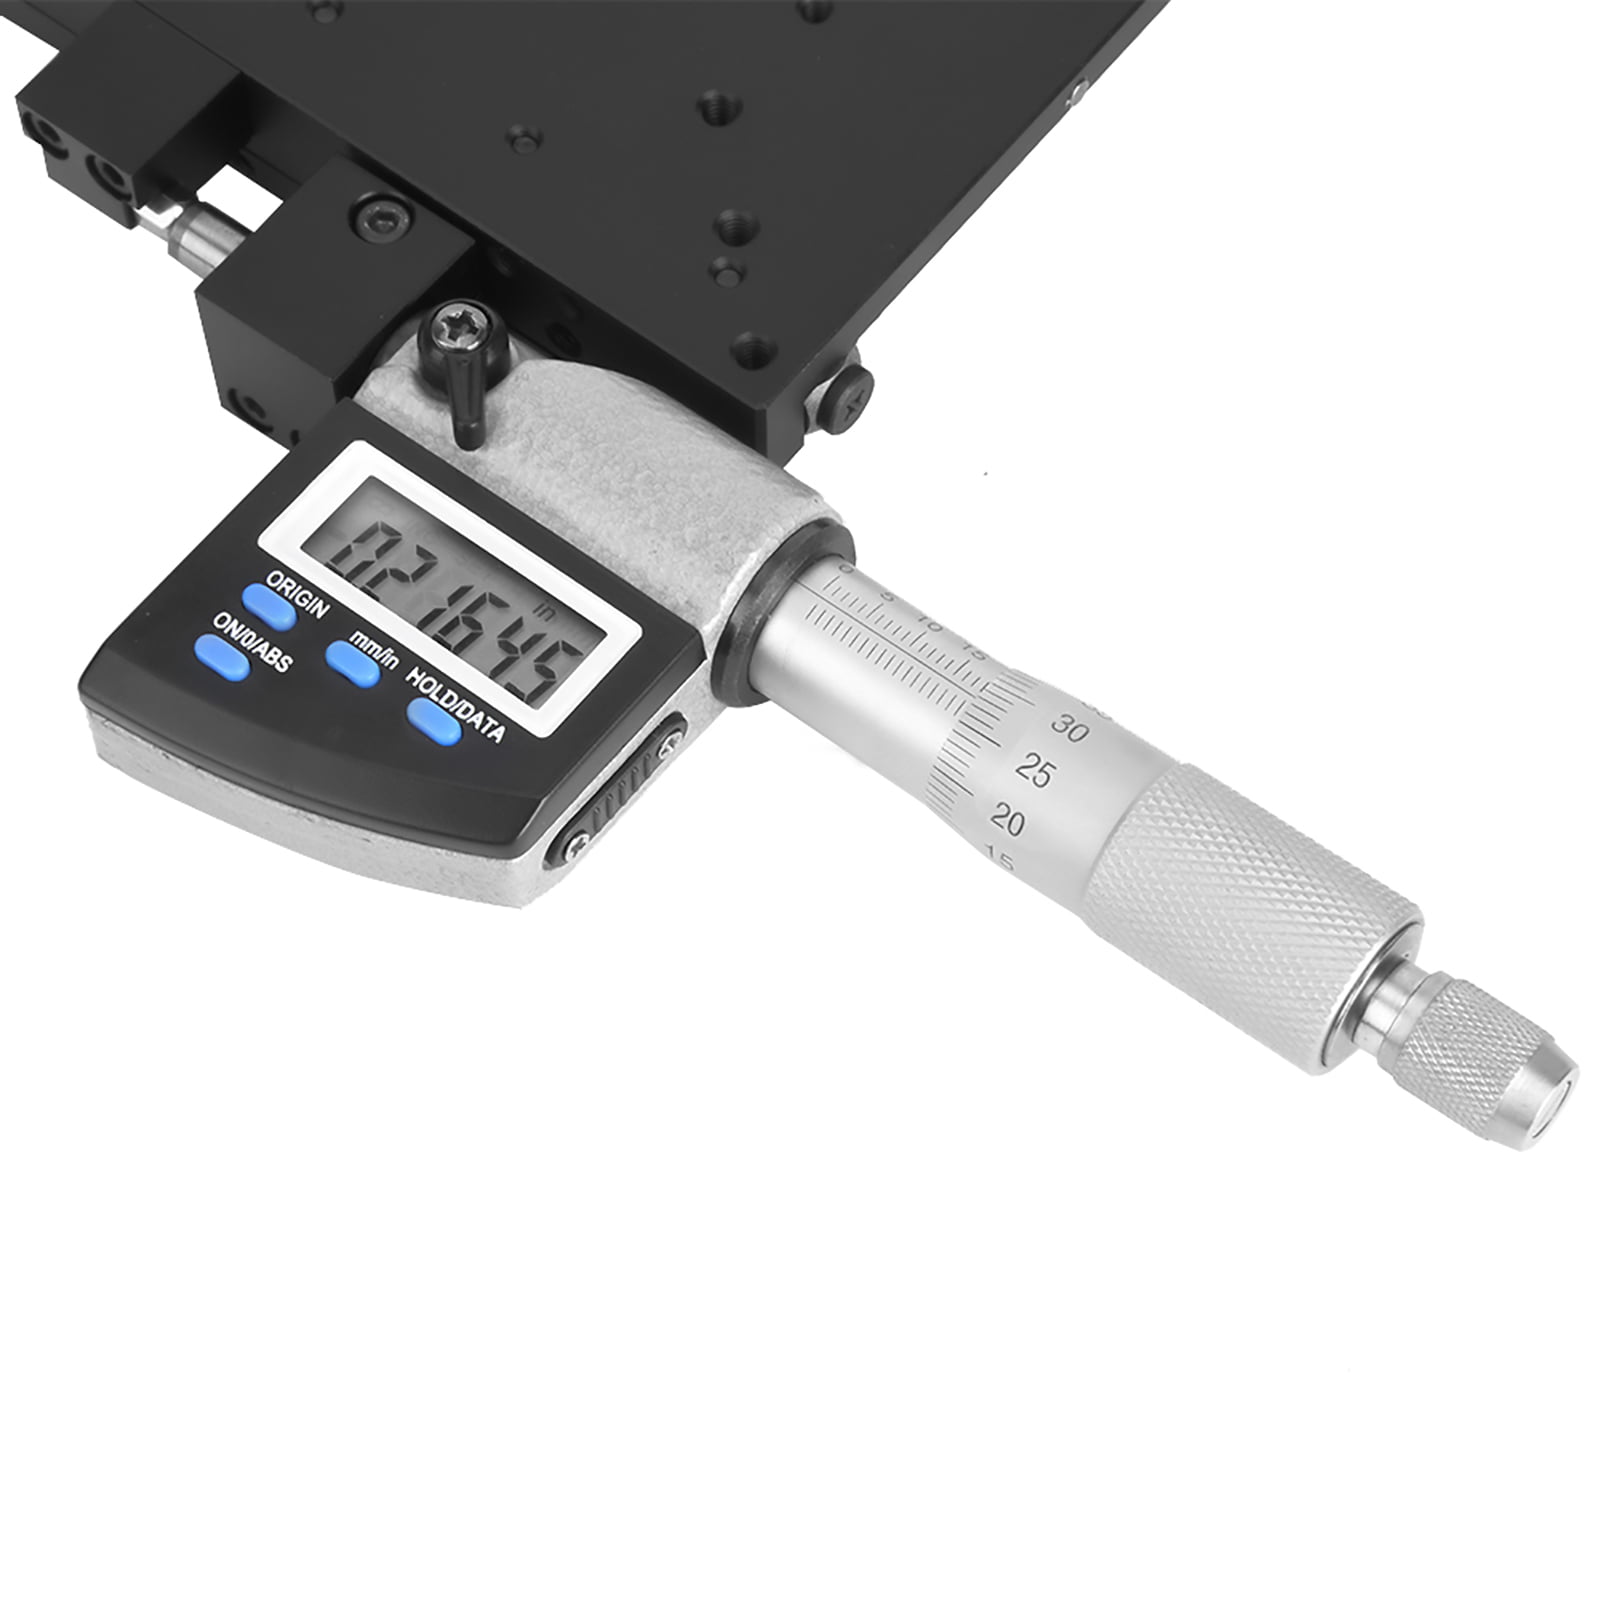 【New Year Deals】Micrometer Platform,SEMX100-AS Micrometer Platform Digital Displayed 100x100mm 0.001mm Micrometer Stage,Digital Display Micrometer Adjustment 